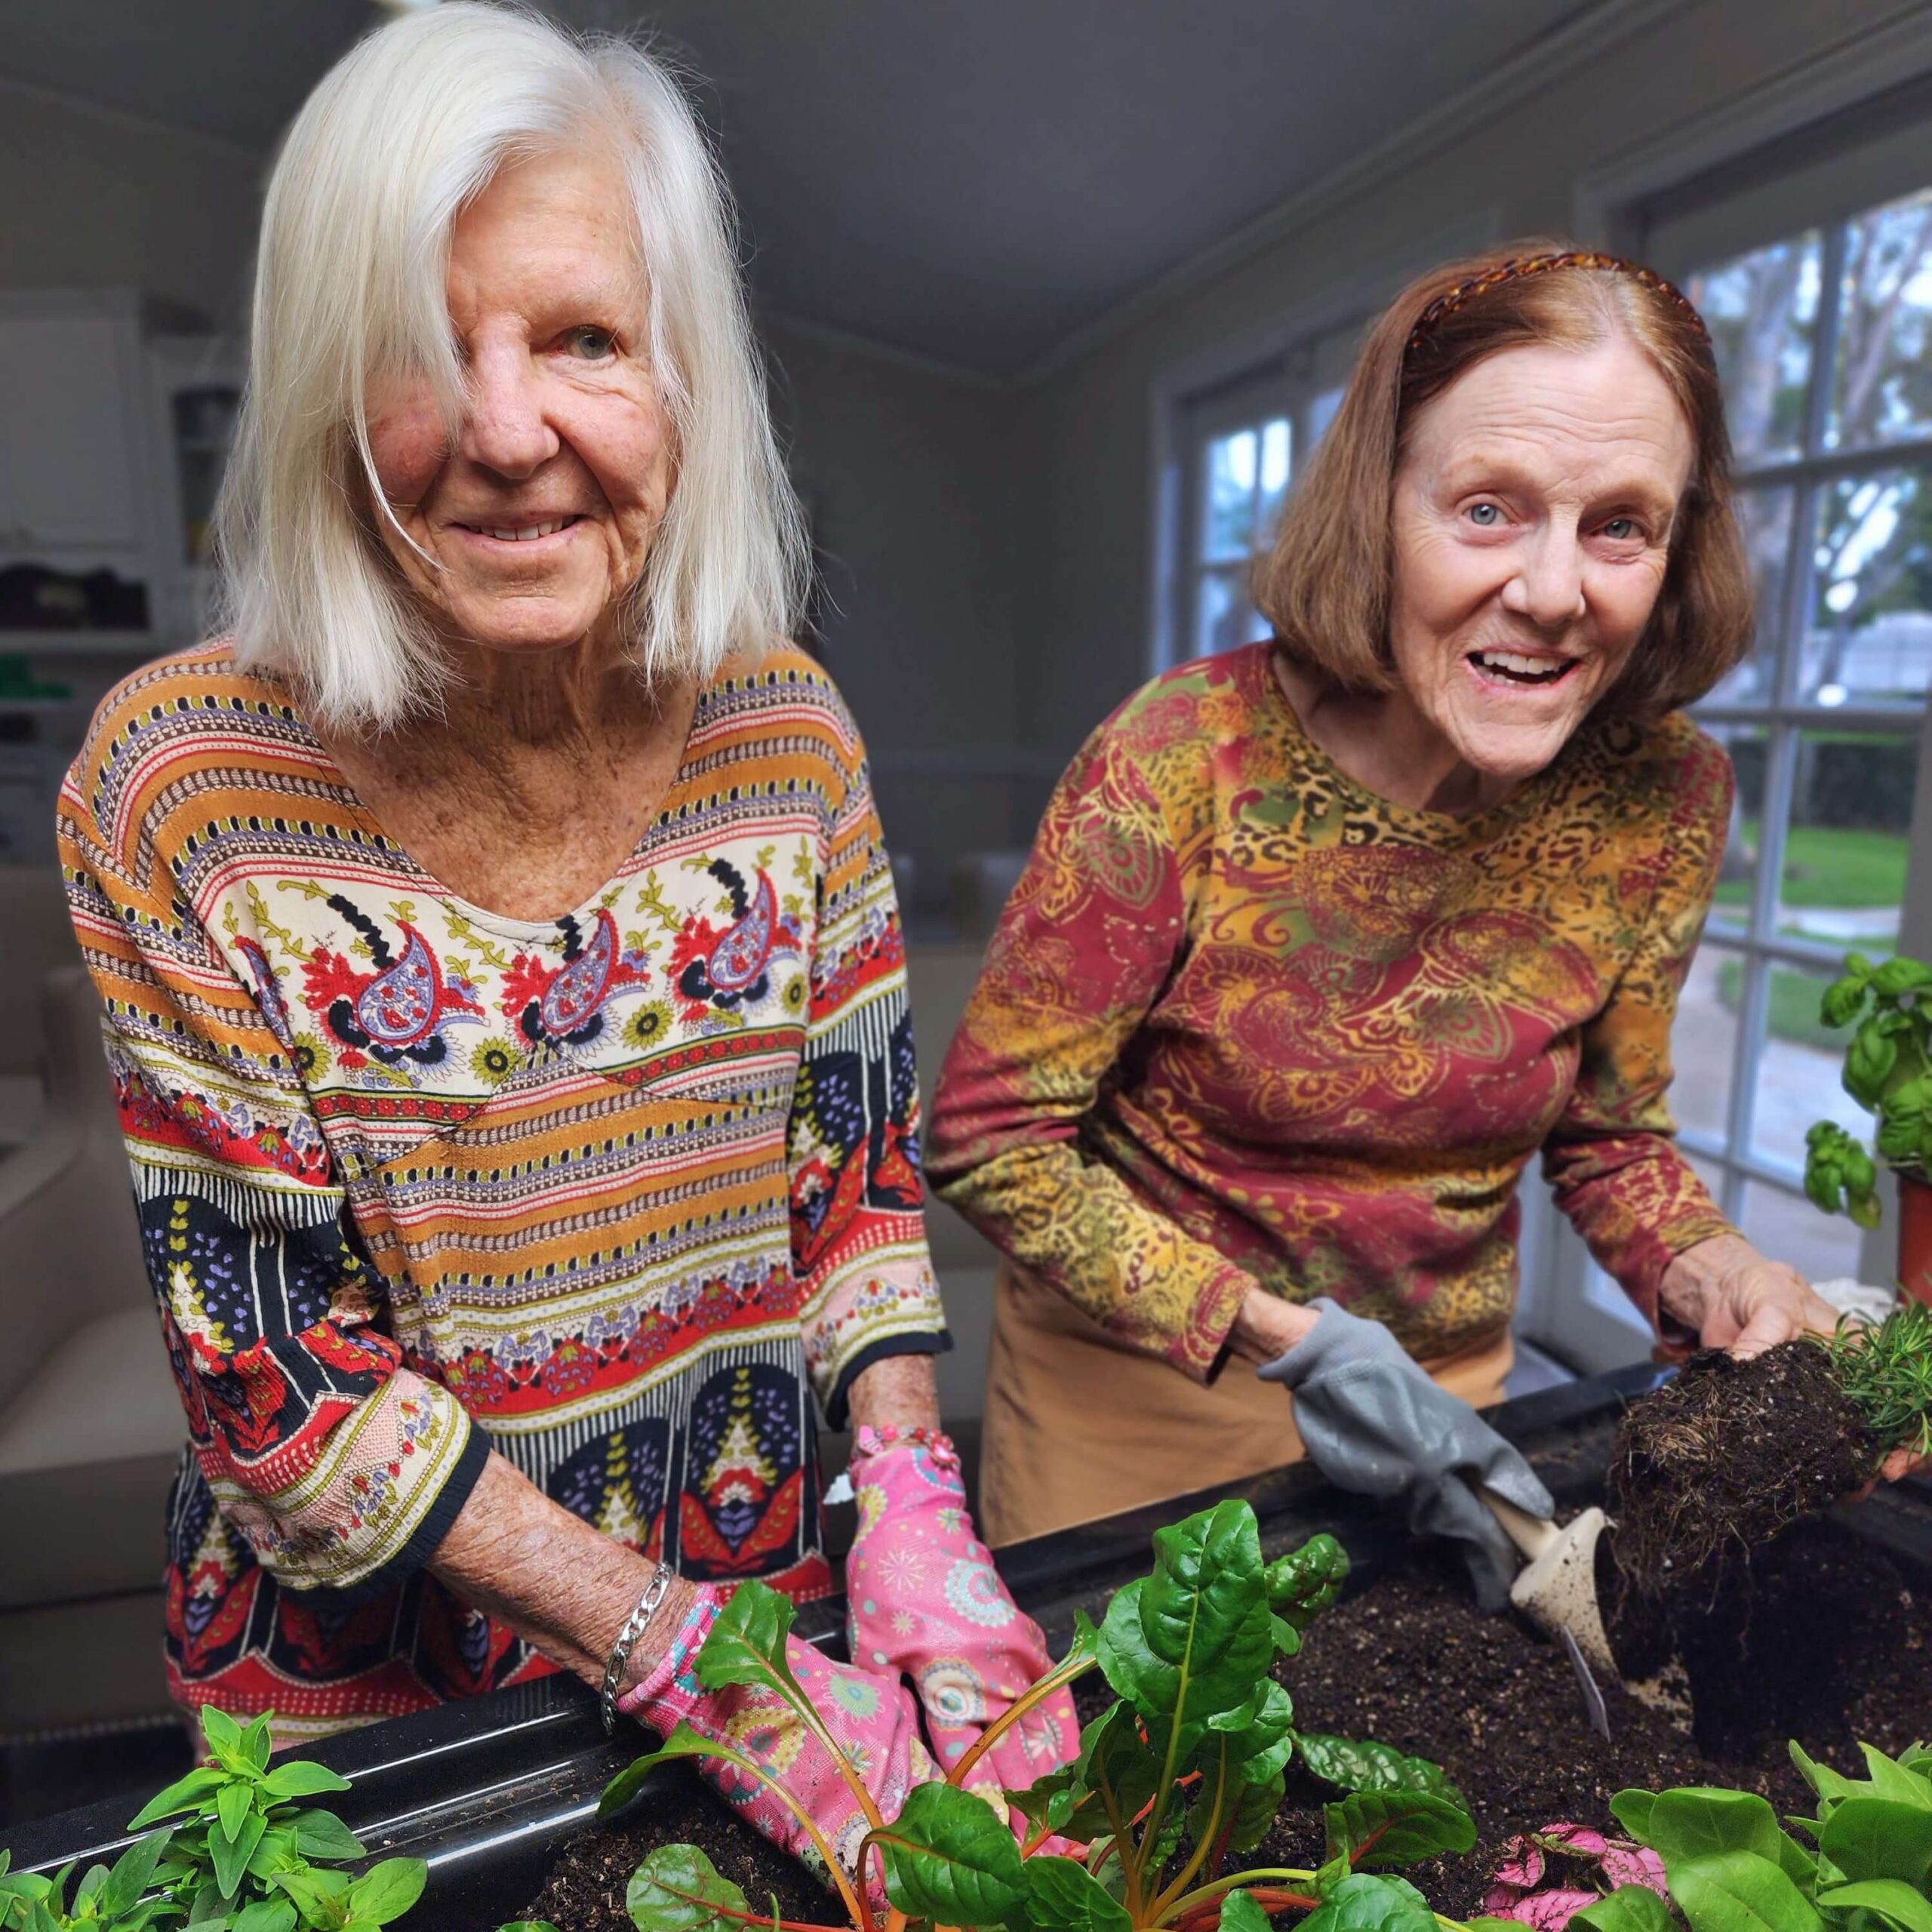 2 elderly women planting in a gardening bed